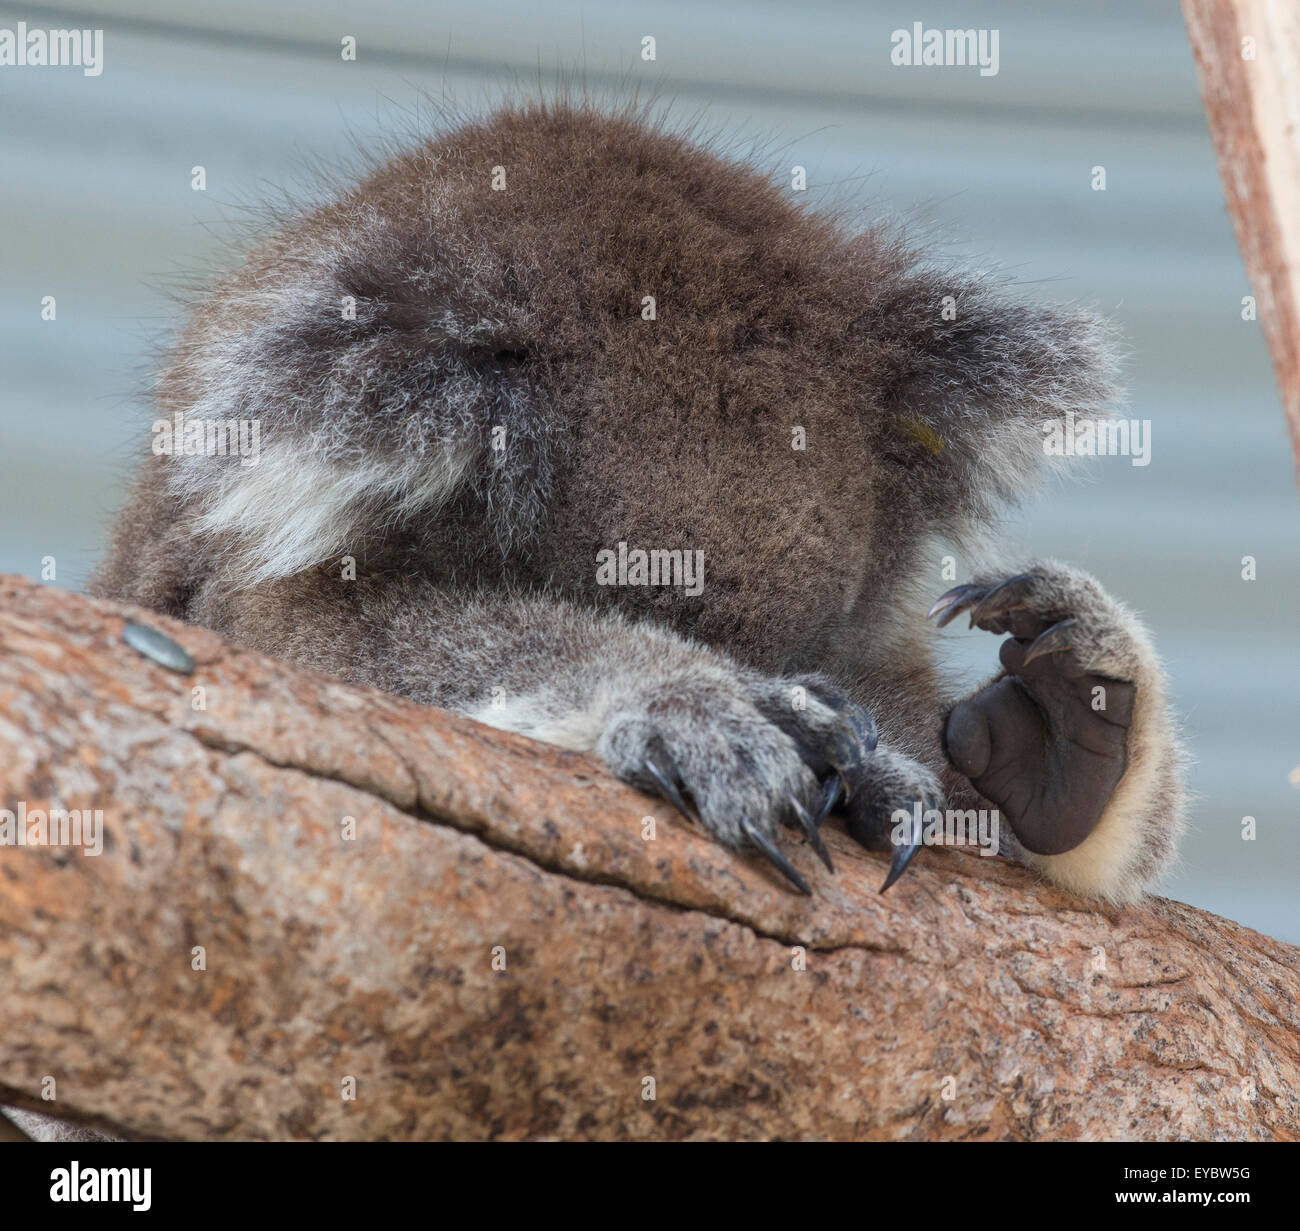 (Tidbinbilla Nature Reserve, Australien---15. März 2014)          Ein Gefangener Koala (Phascolarctos Cinereus) legt seinen Kopf auf Stockfoto